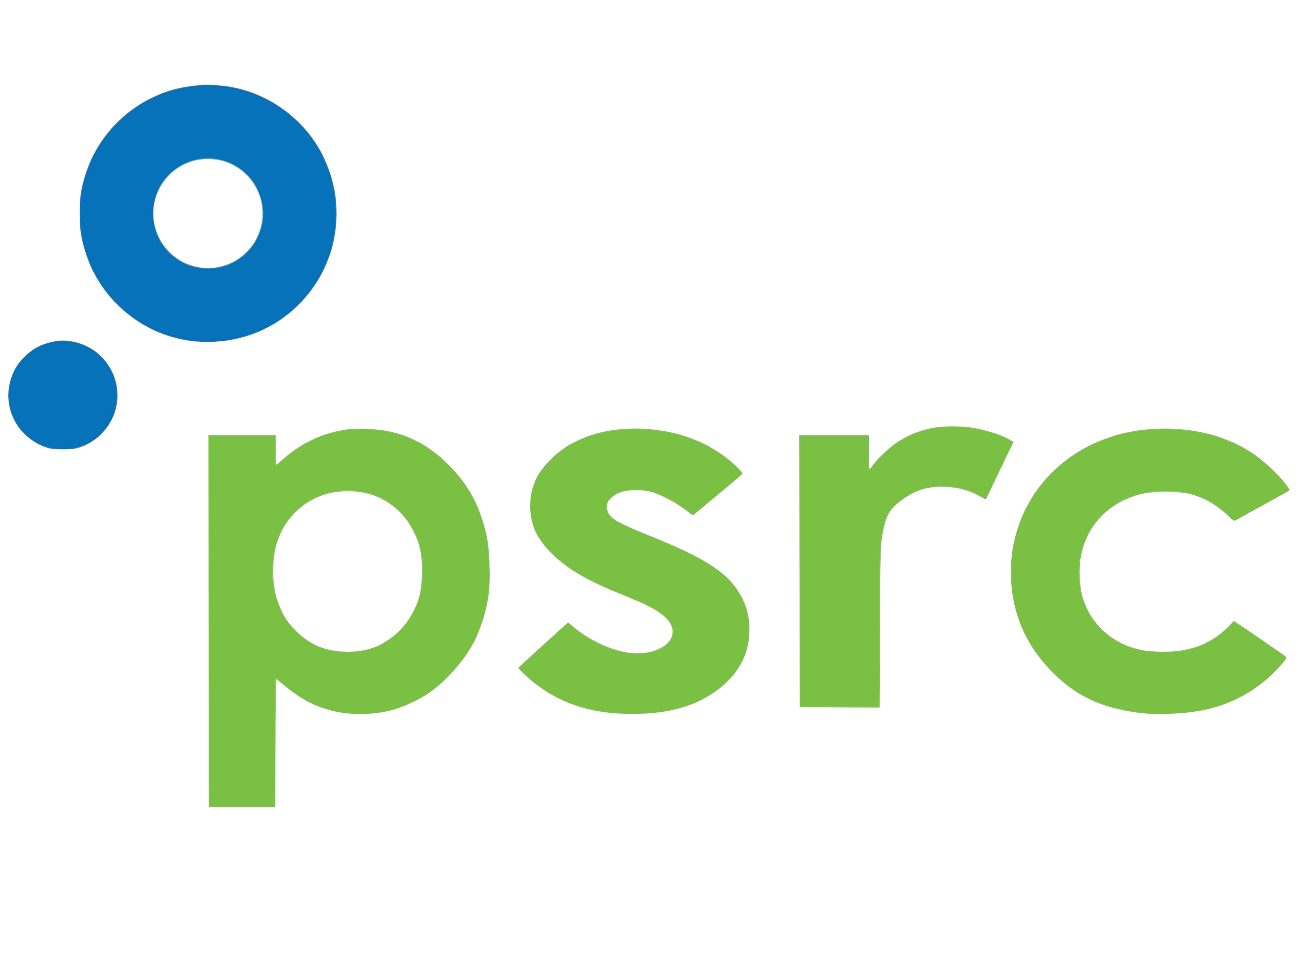 PSRC Logo